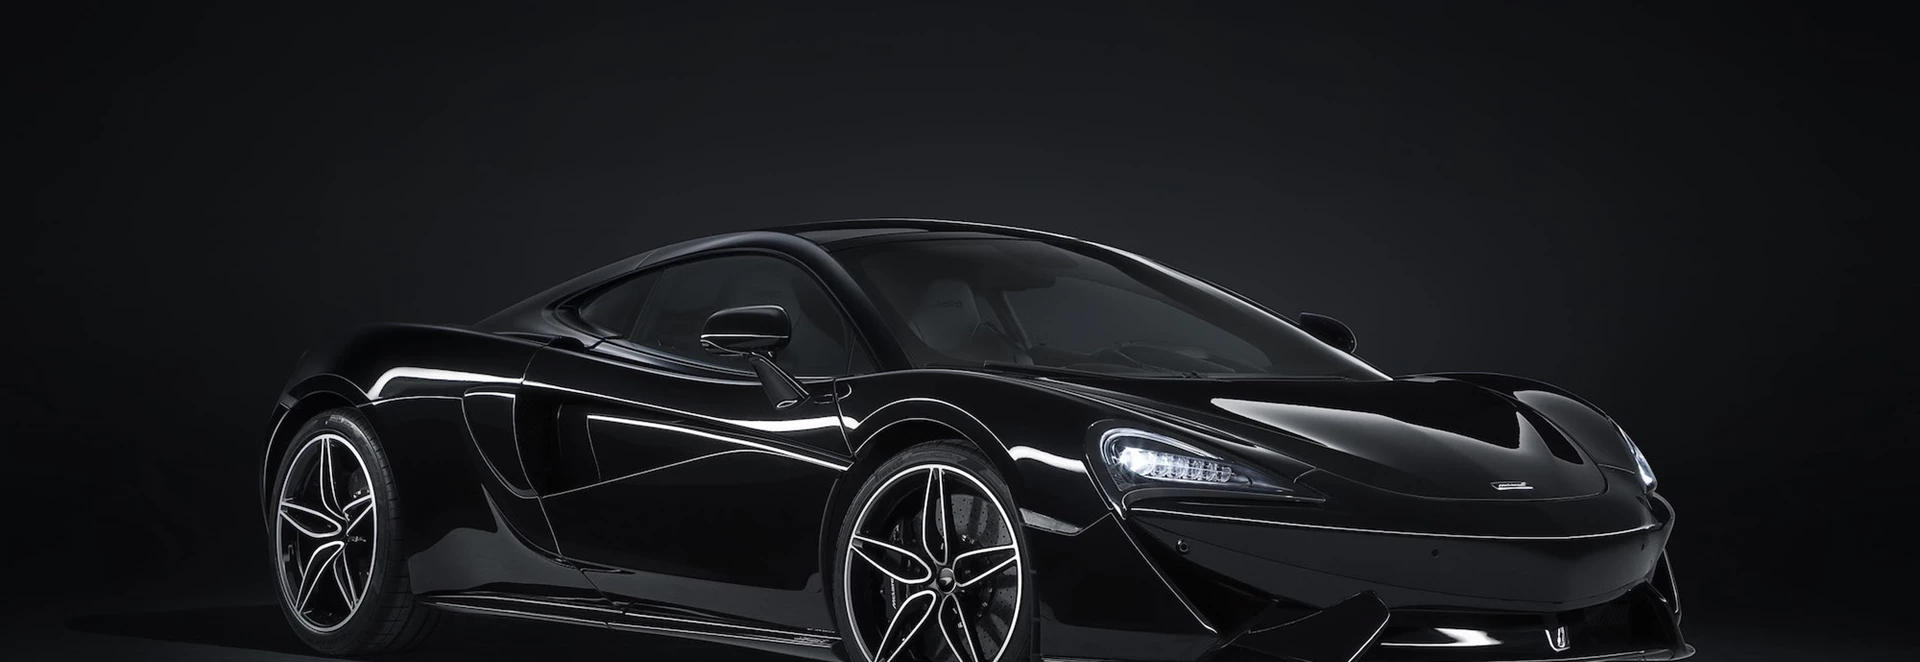 Ultra-limited McLaren 570GT Black Edition revealed